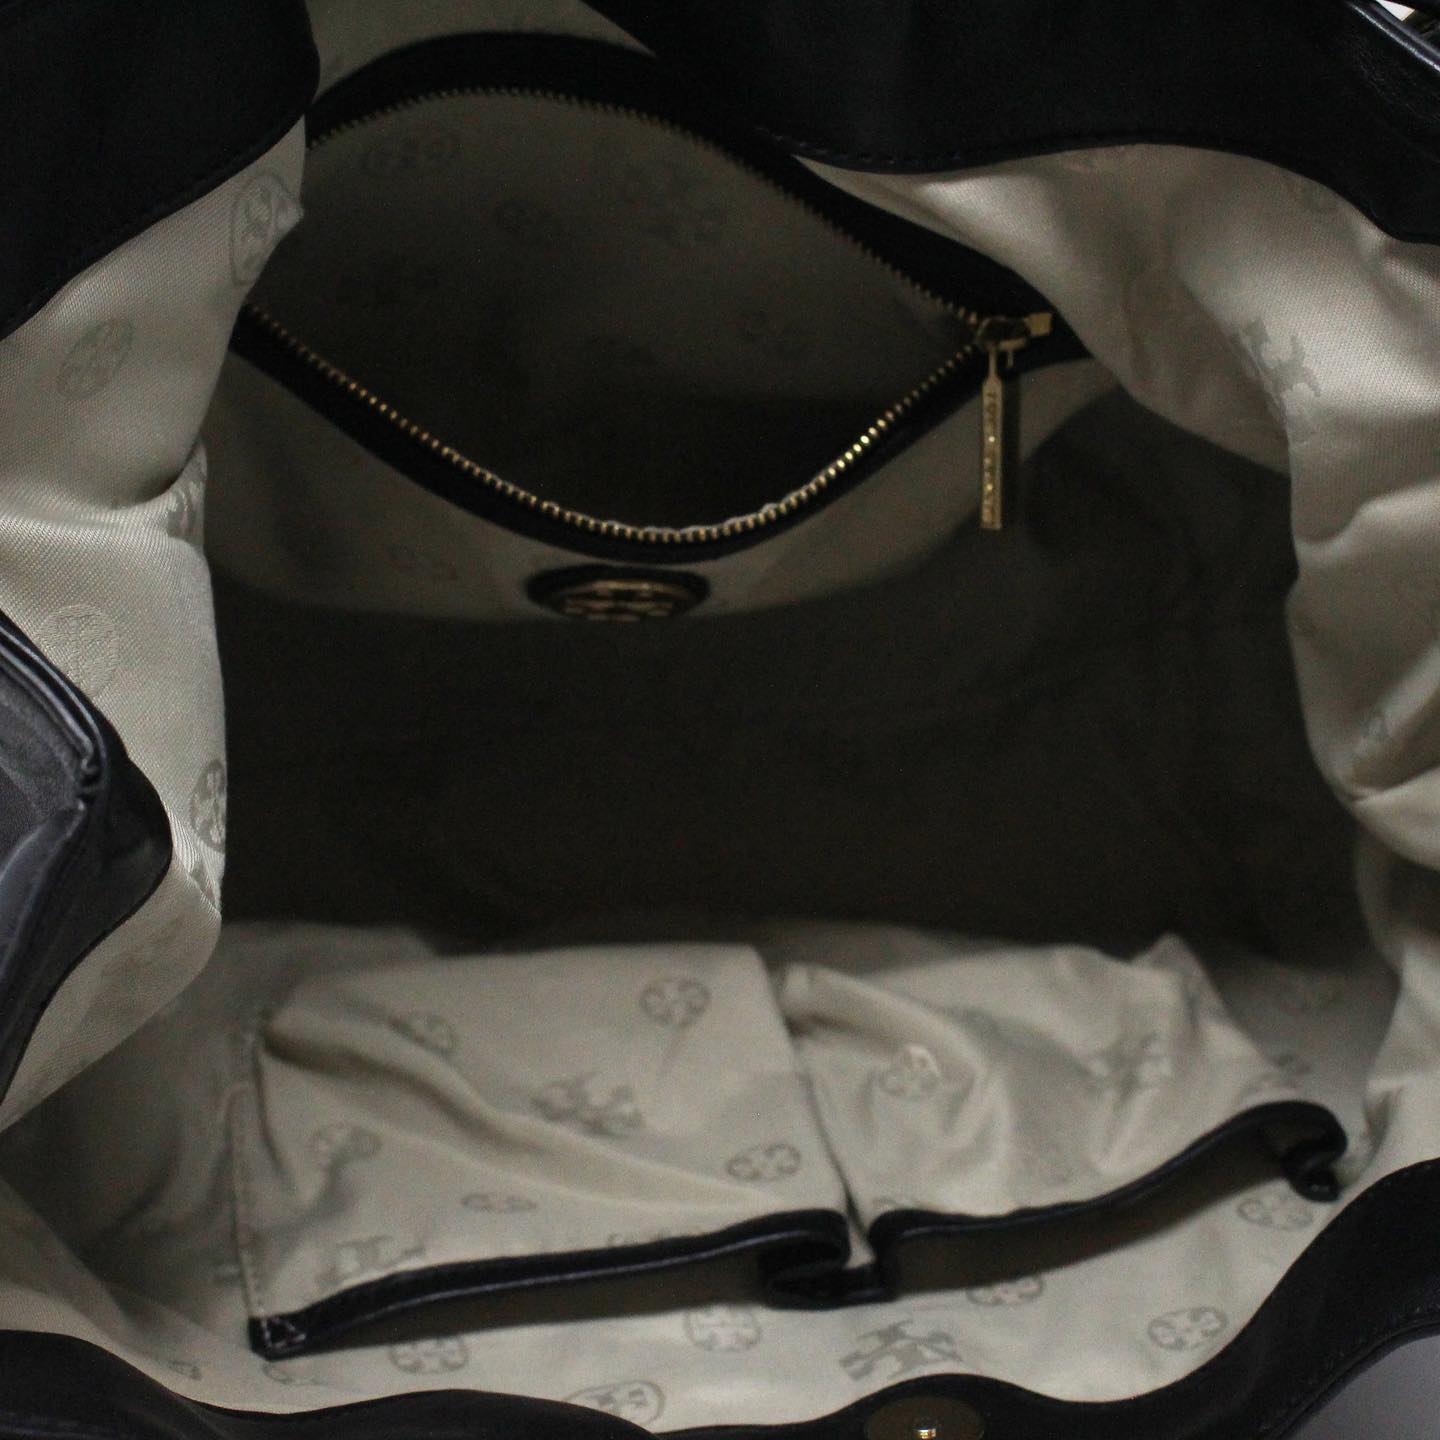 Leather handbag Tory Burch Black in Leather - 25092160